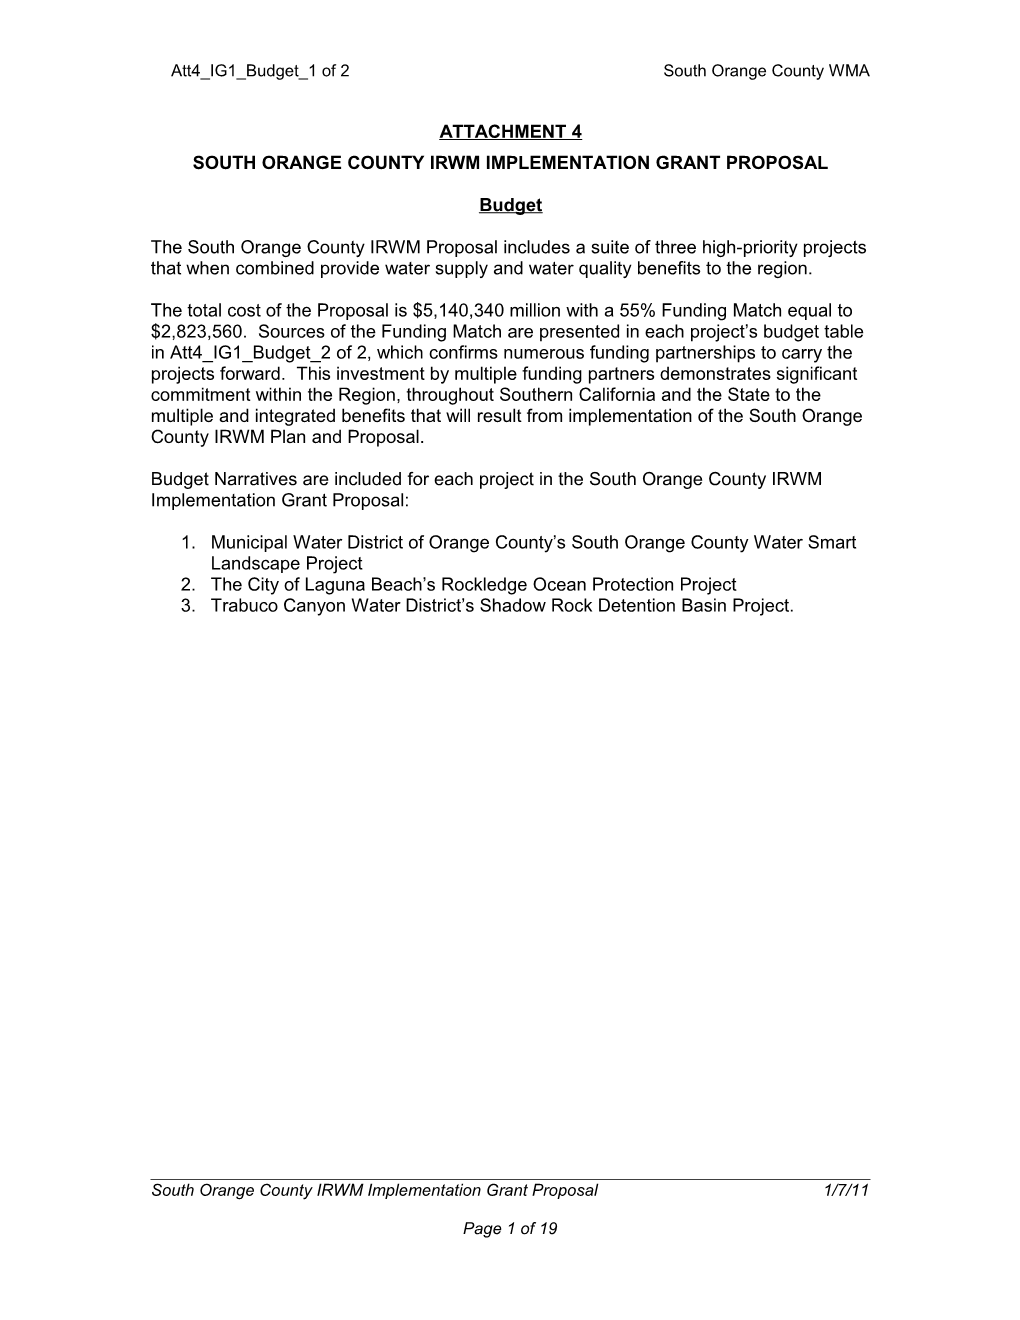 Southorangecounty Irwm Implementation Grant Proposal